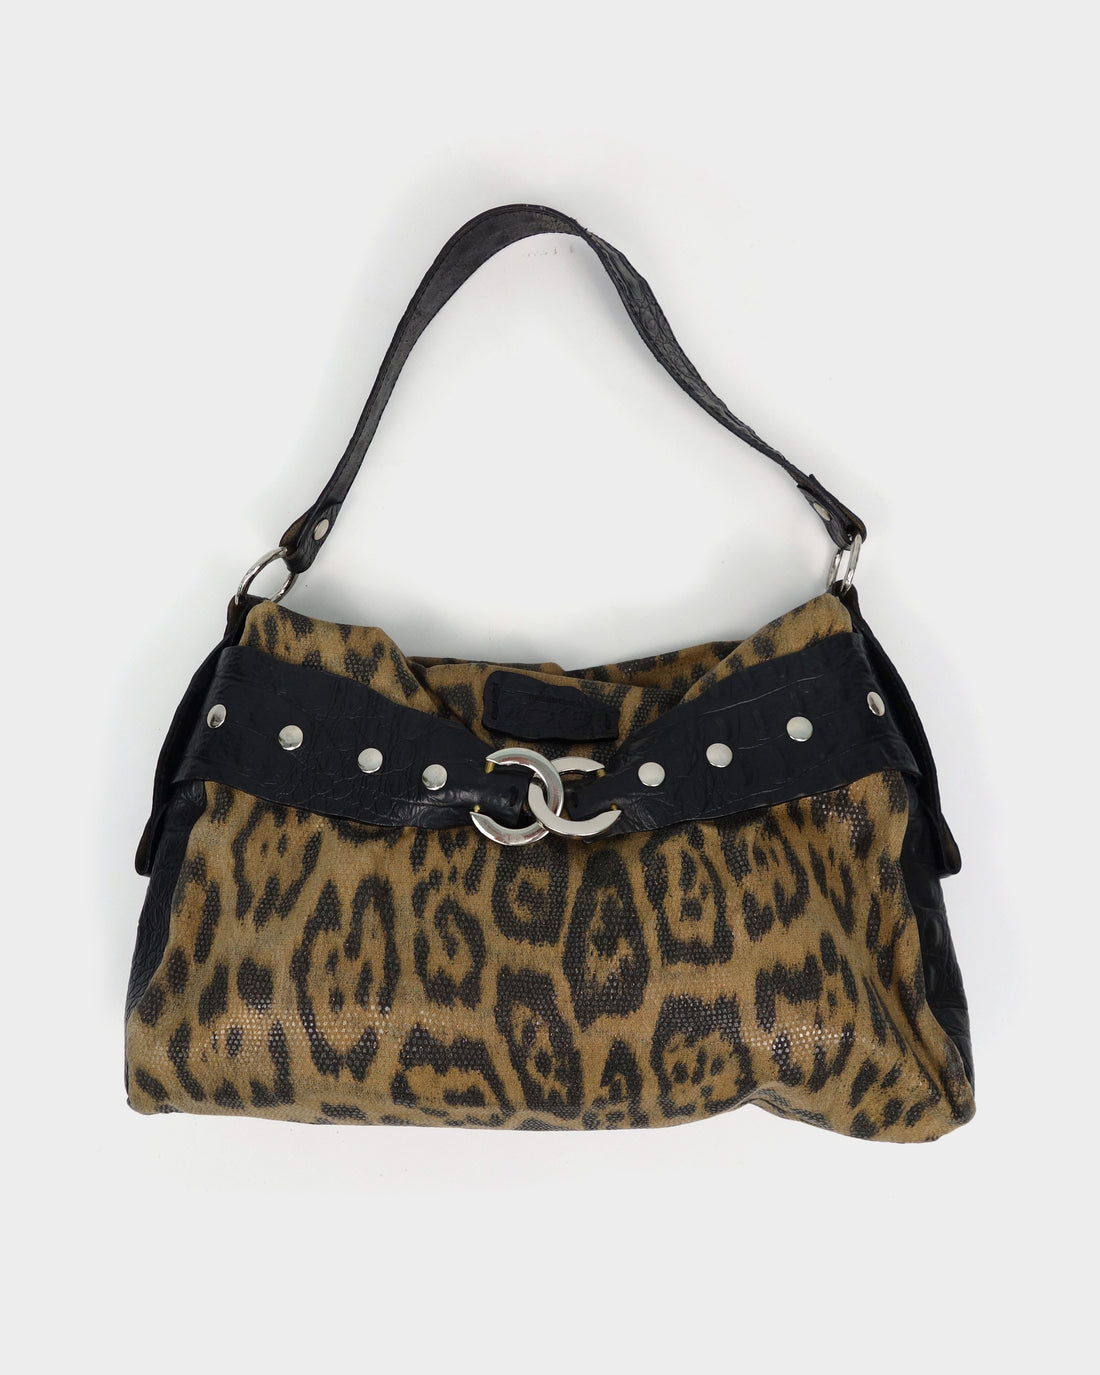 Cavalli Freedom Cheetah Print Leather Bag 2000's